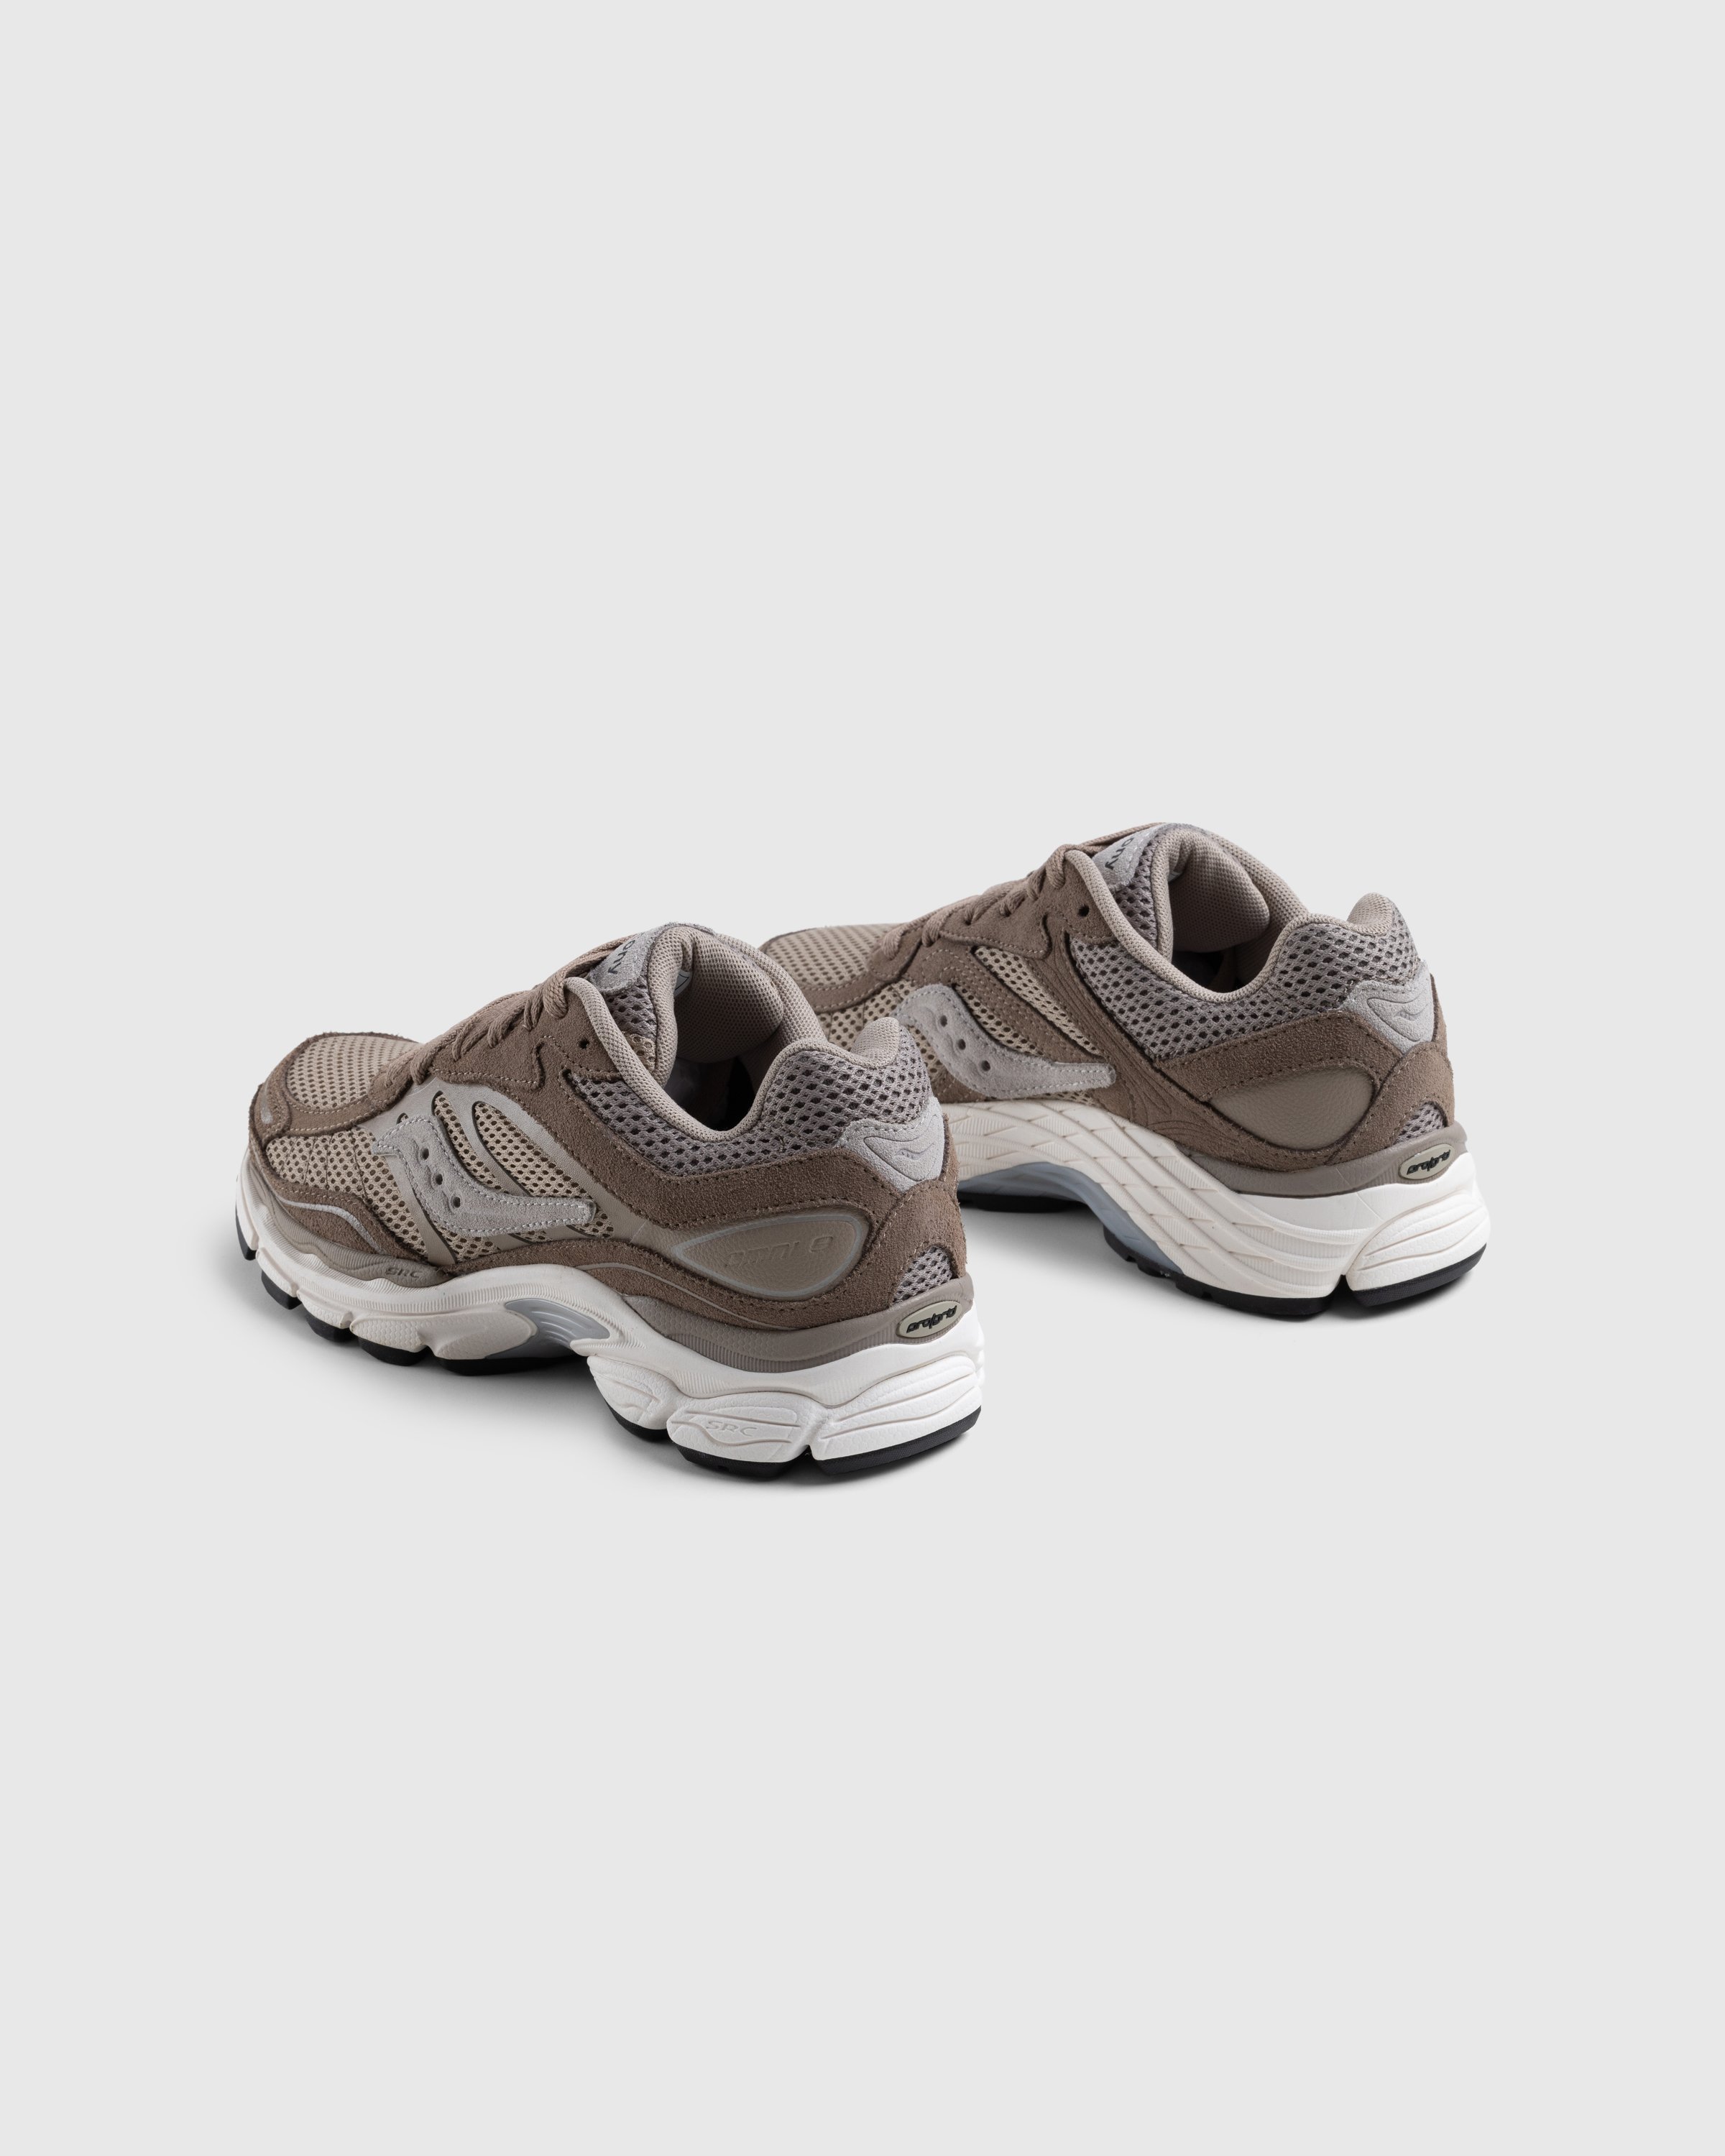 Saucony - ProGrid Omni 9 Premium Greige - Footwear - Grey - Image 4